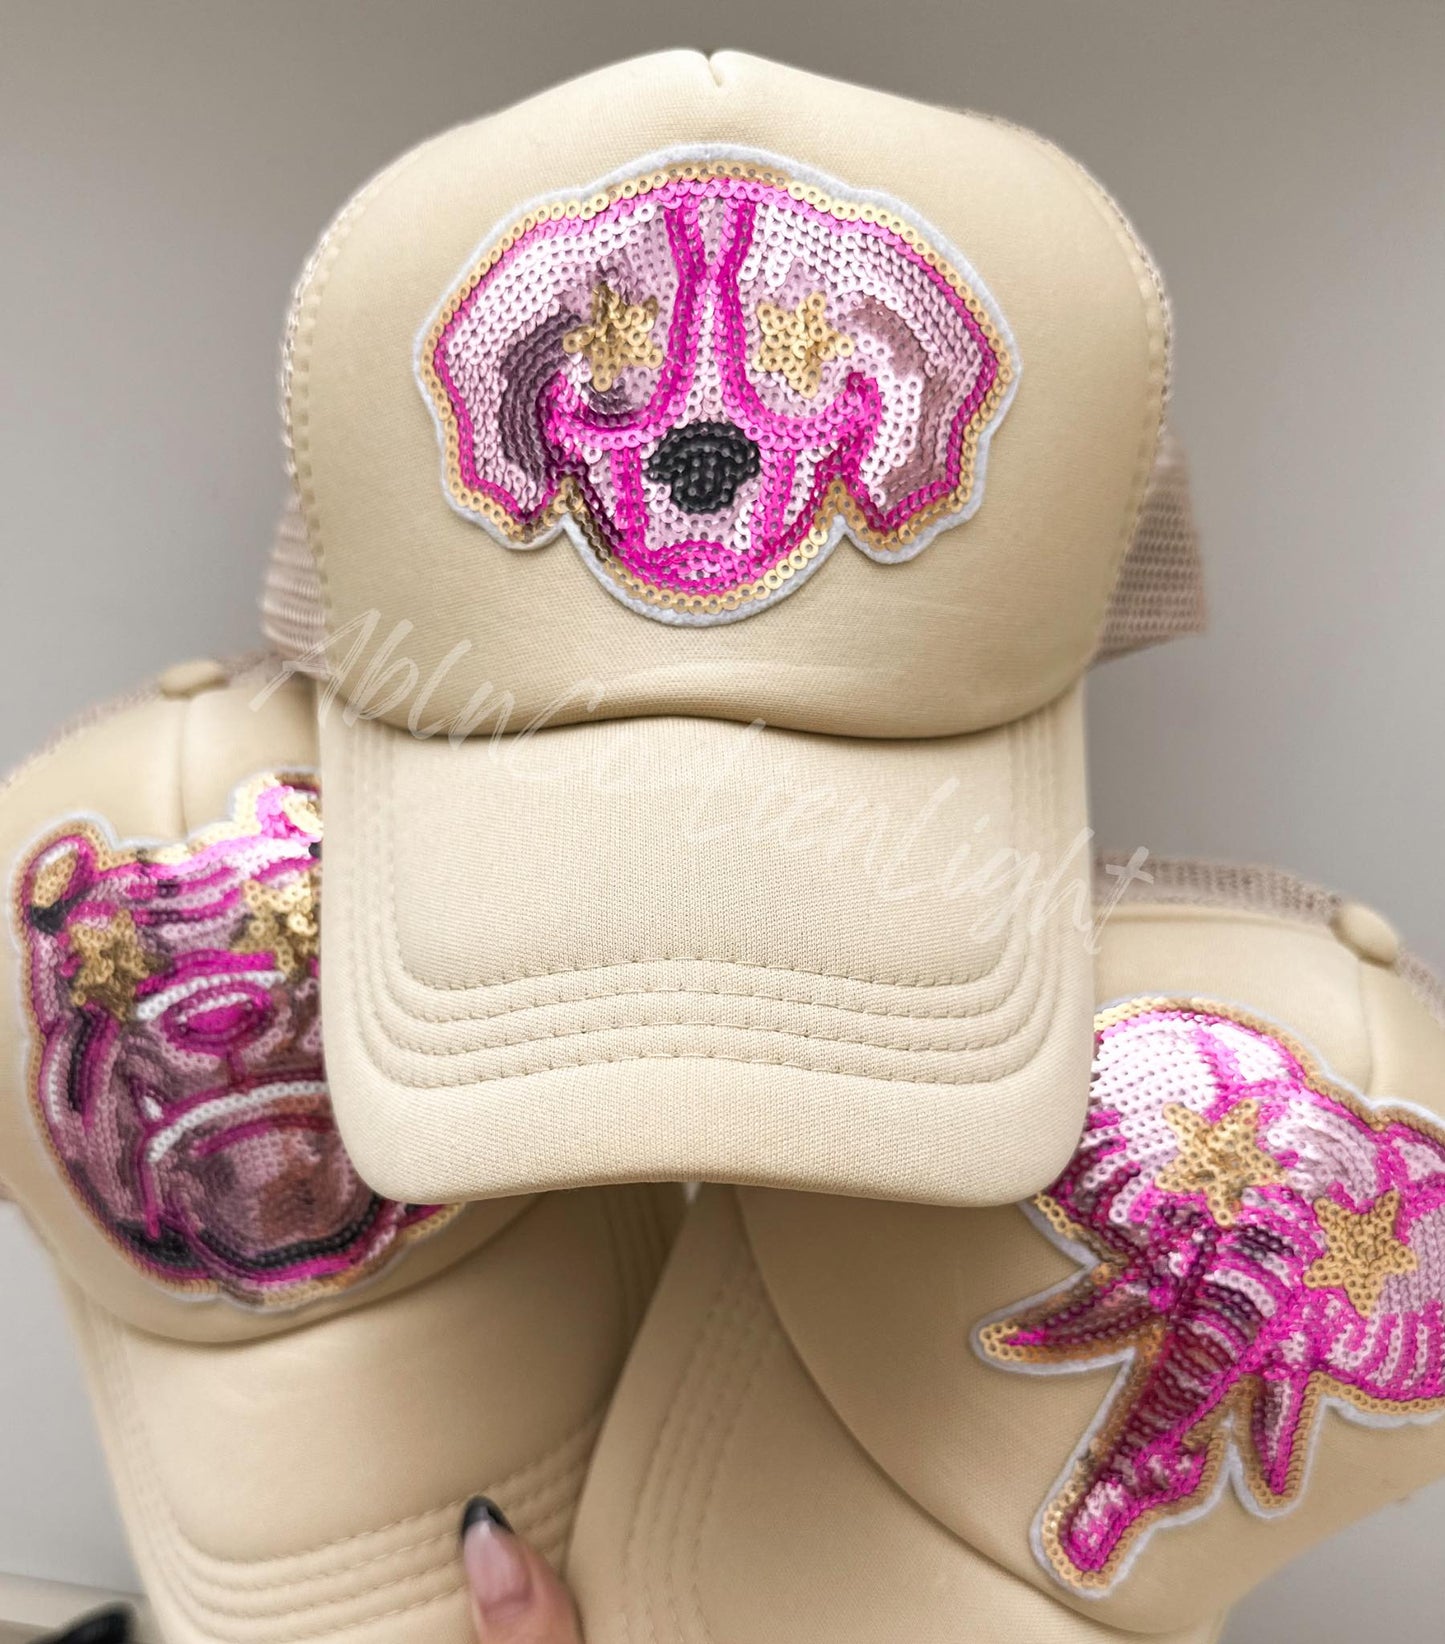 Preppy Pink Mascot™ Colonel Reb Trucker Hat